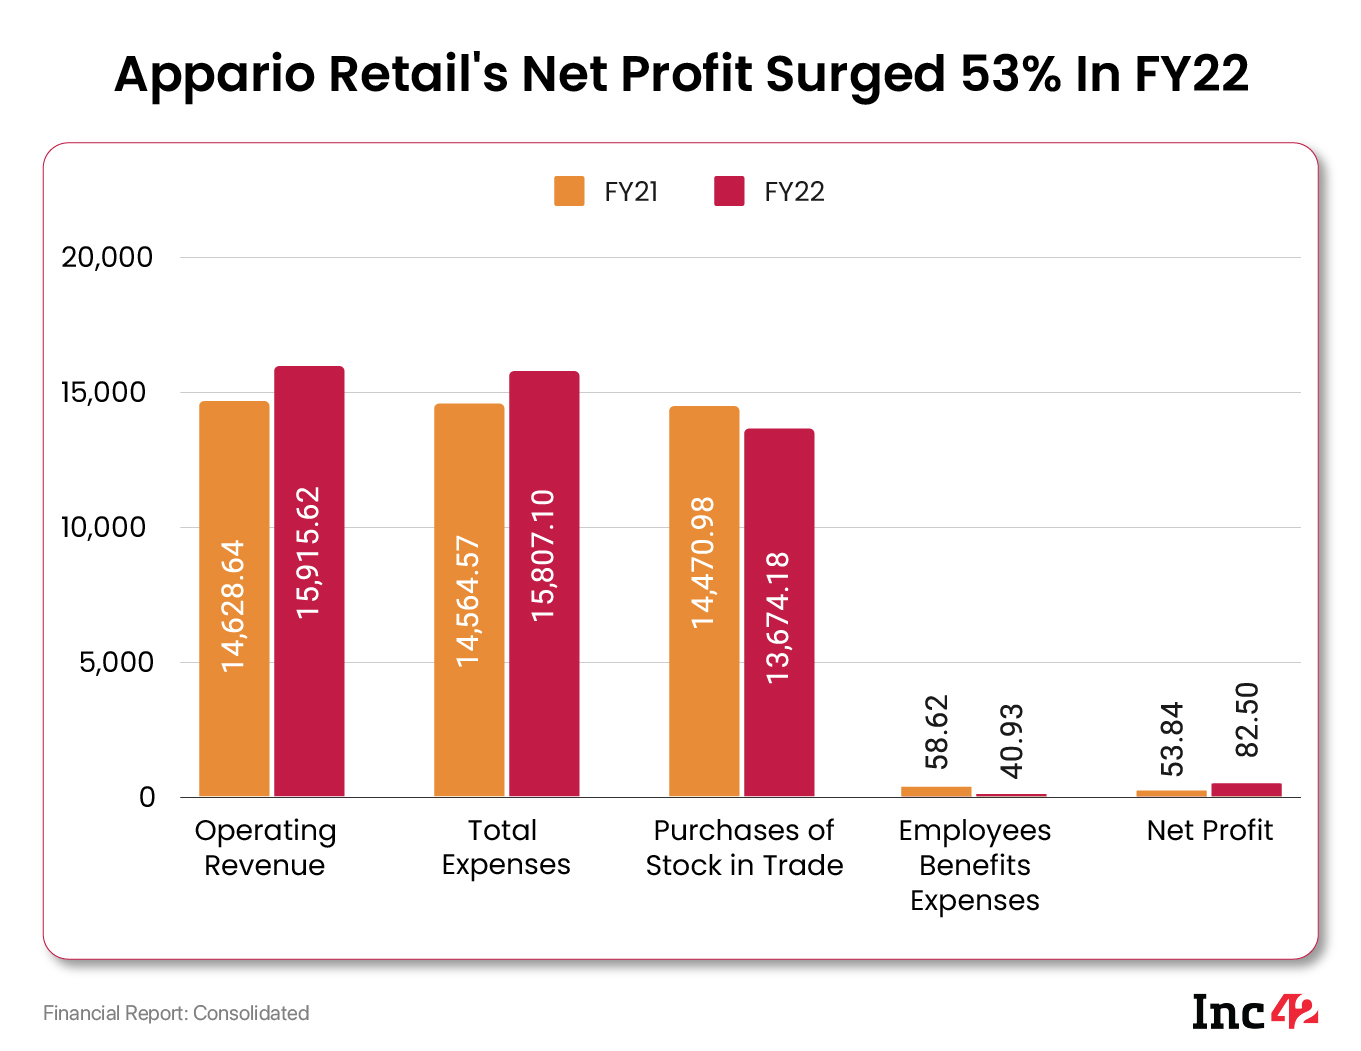 Appario Retail's Net Profit Surged 53% in FY22